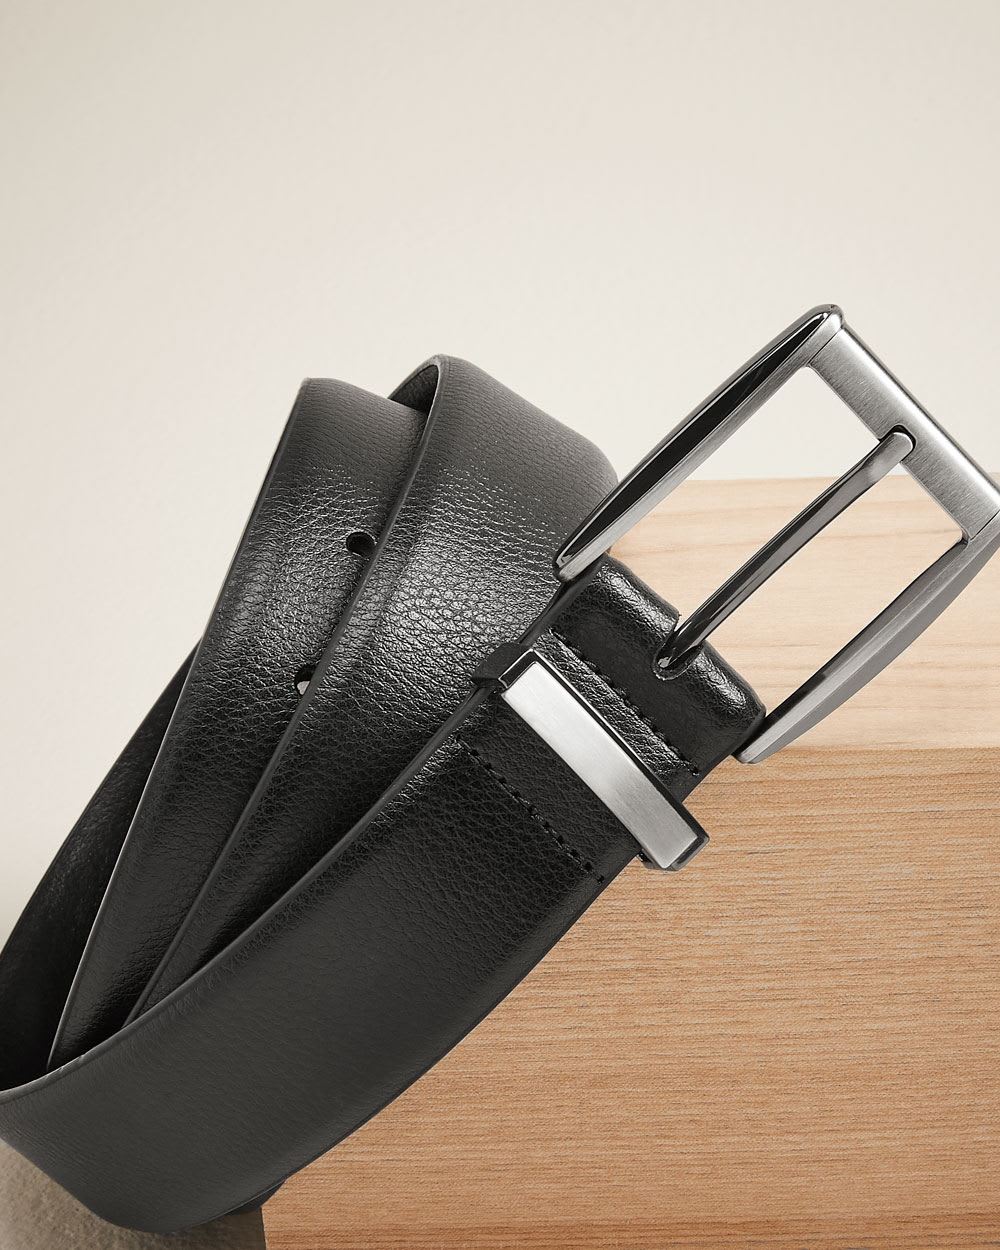 Textured Black Leather Belt